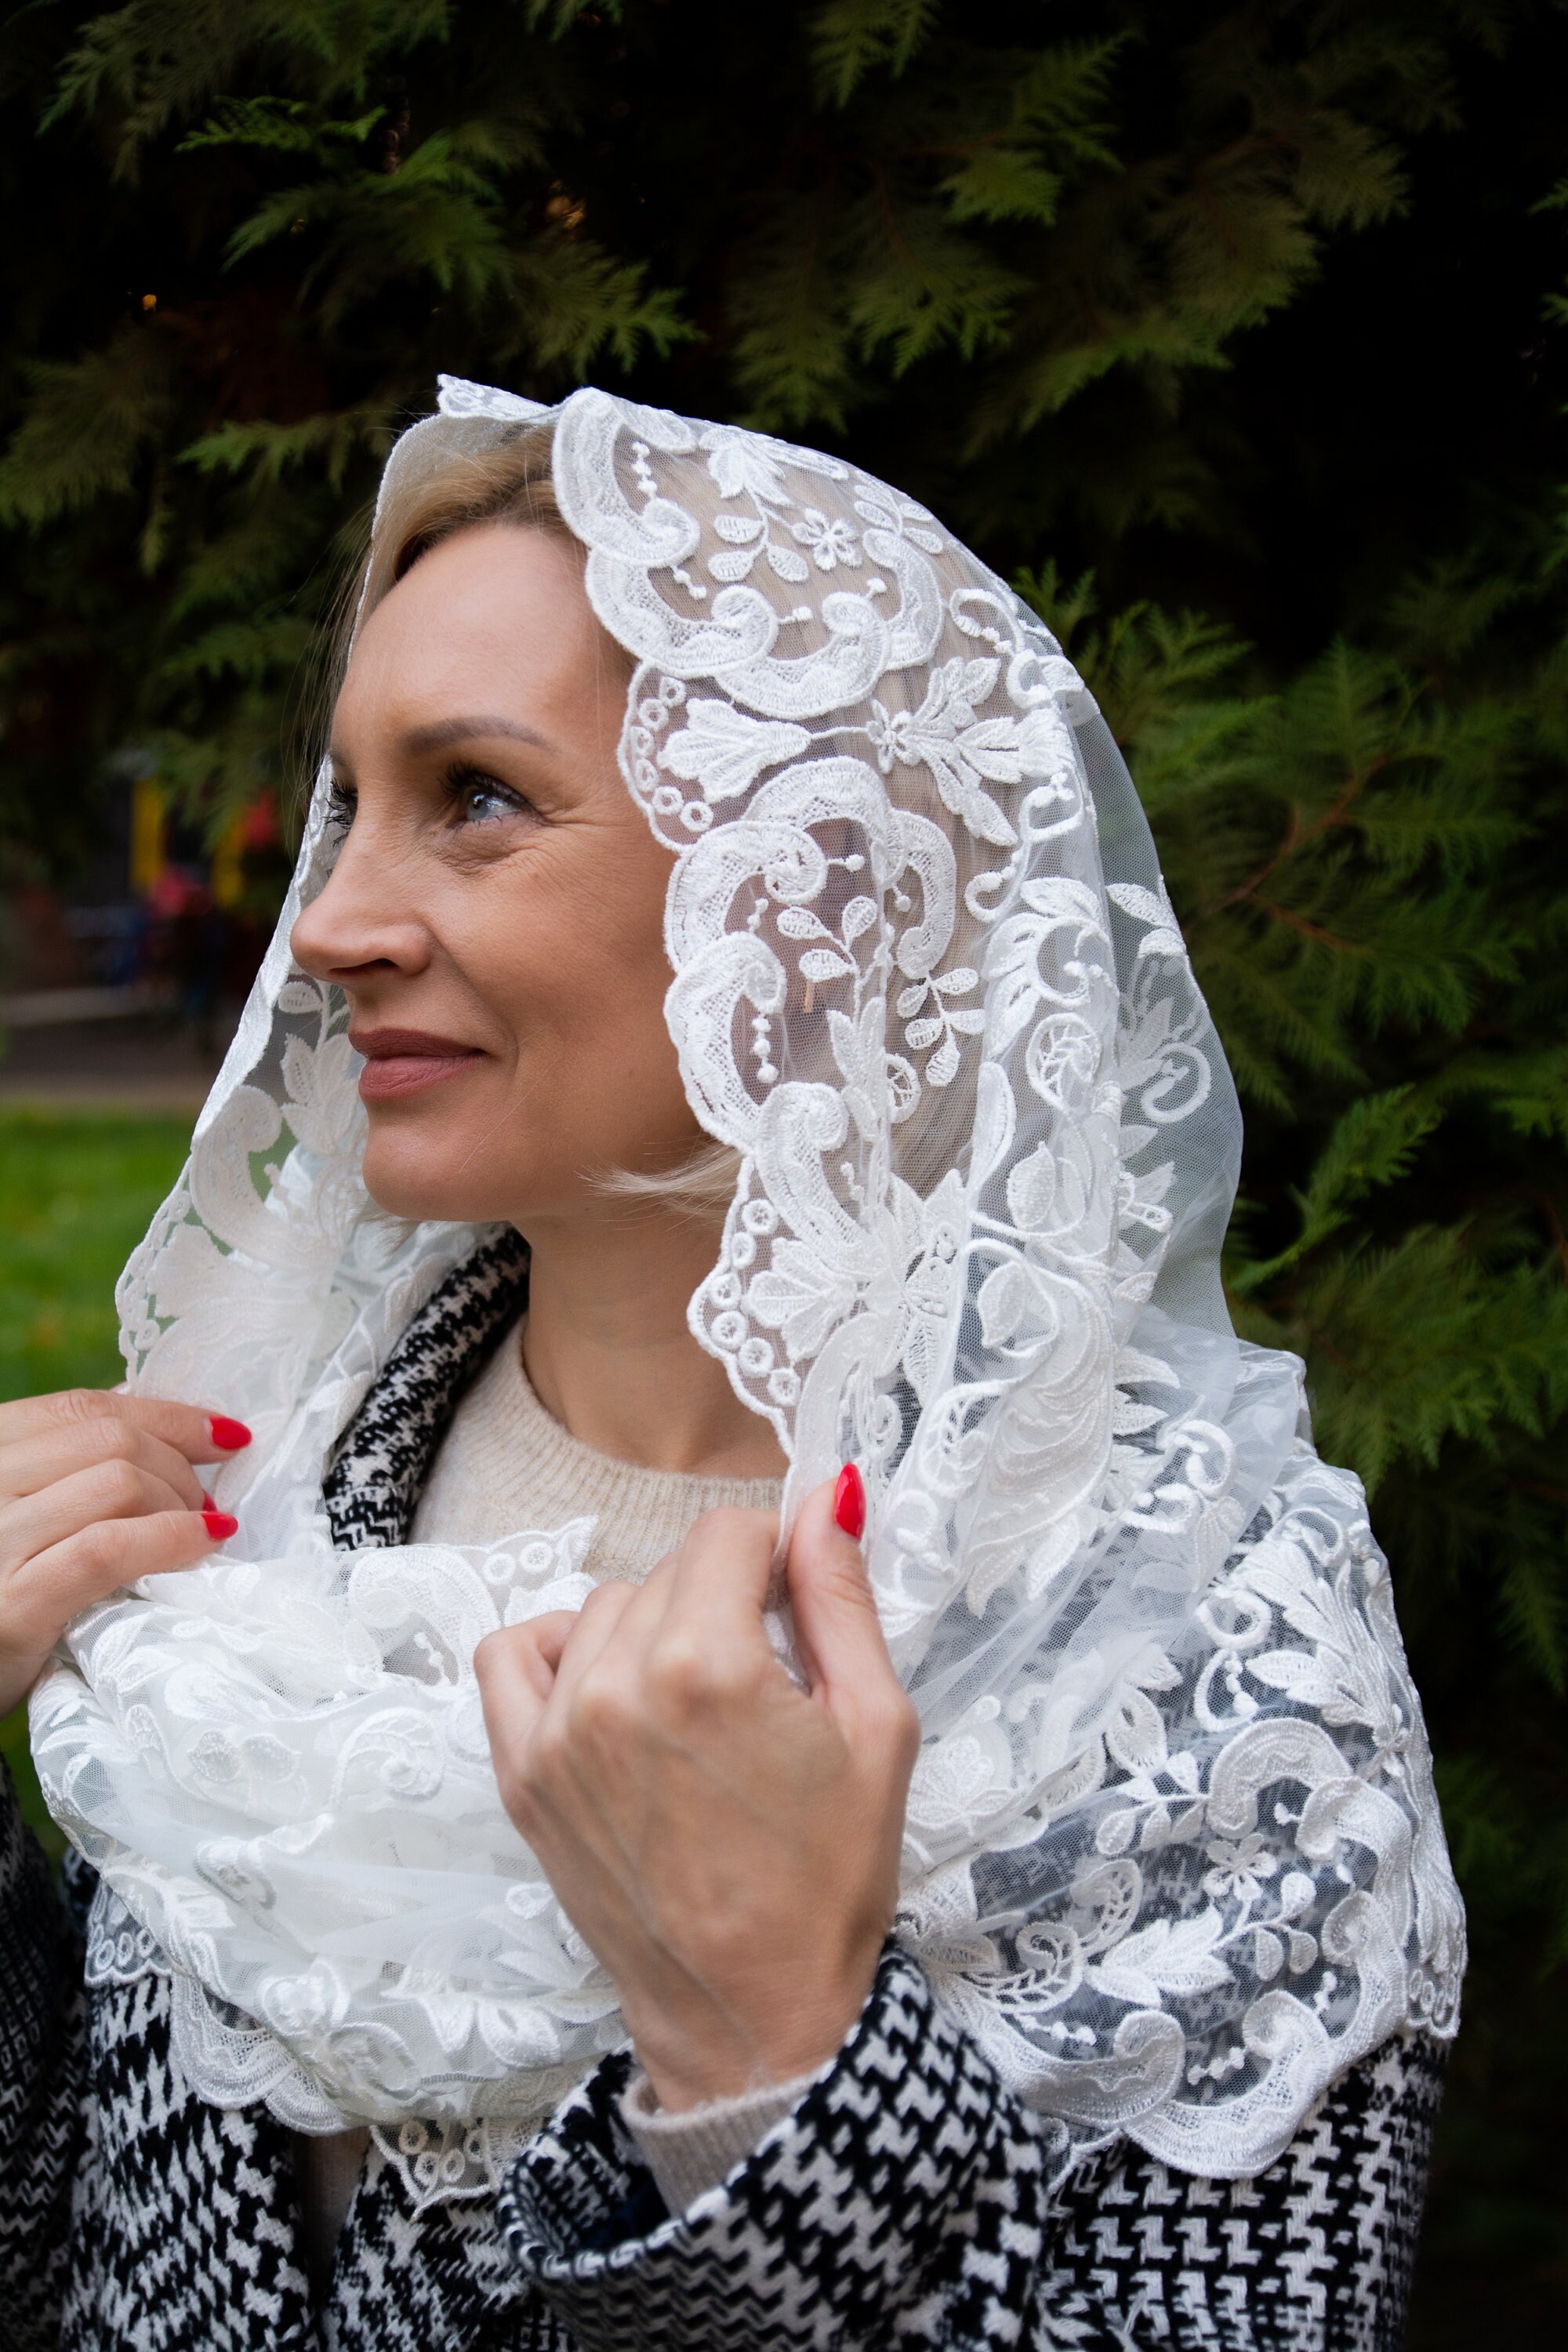 Lace Veils for Church Mantilla Catholic Veil Latin Mass Head Covering White  Black Veils for Bridal Women